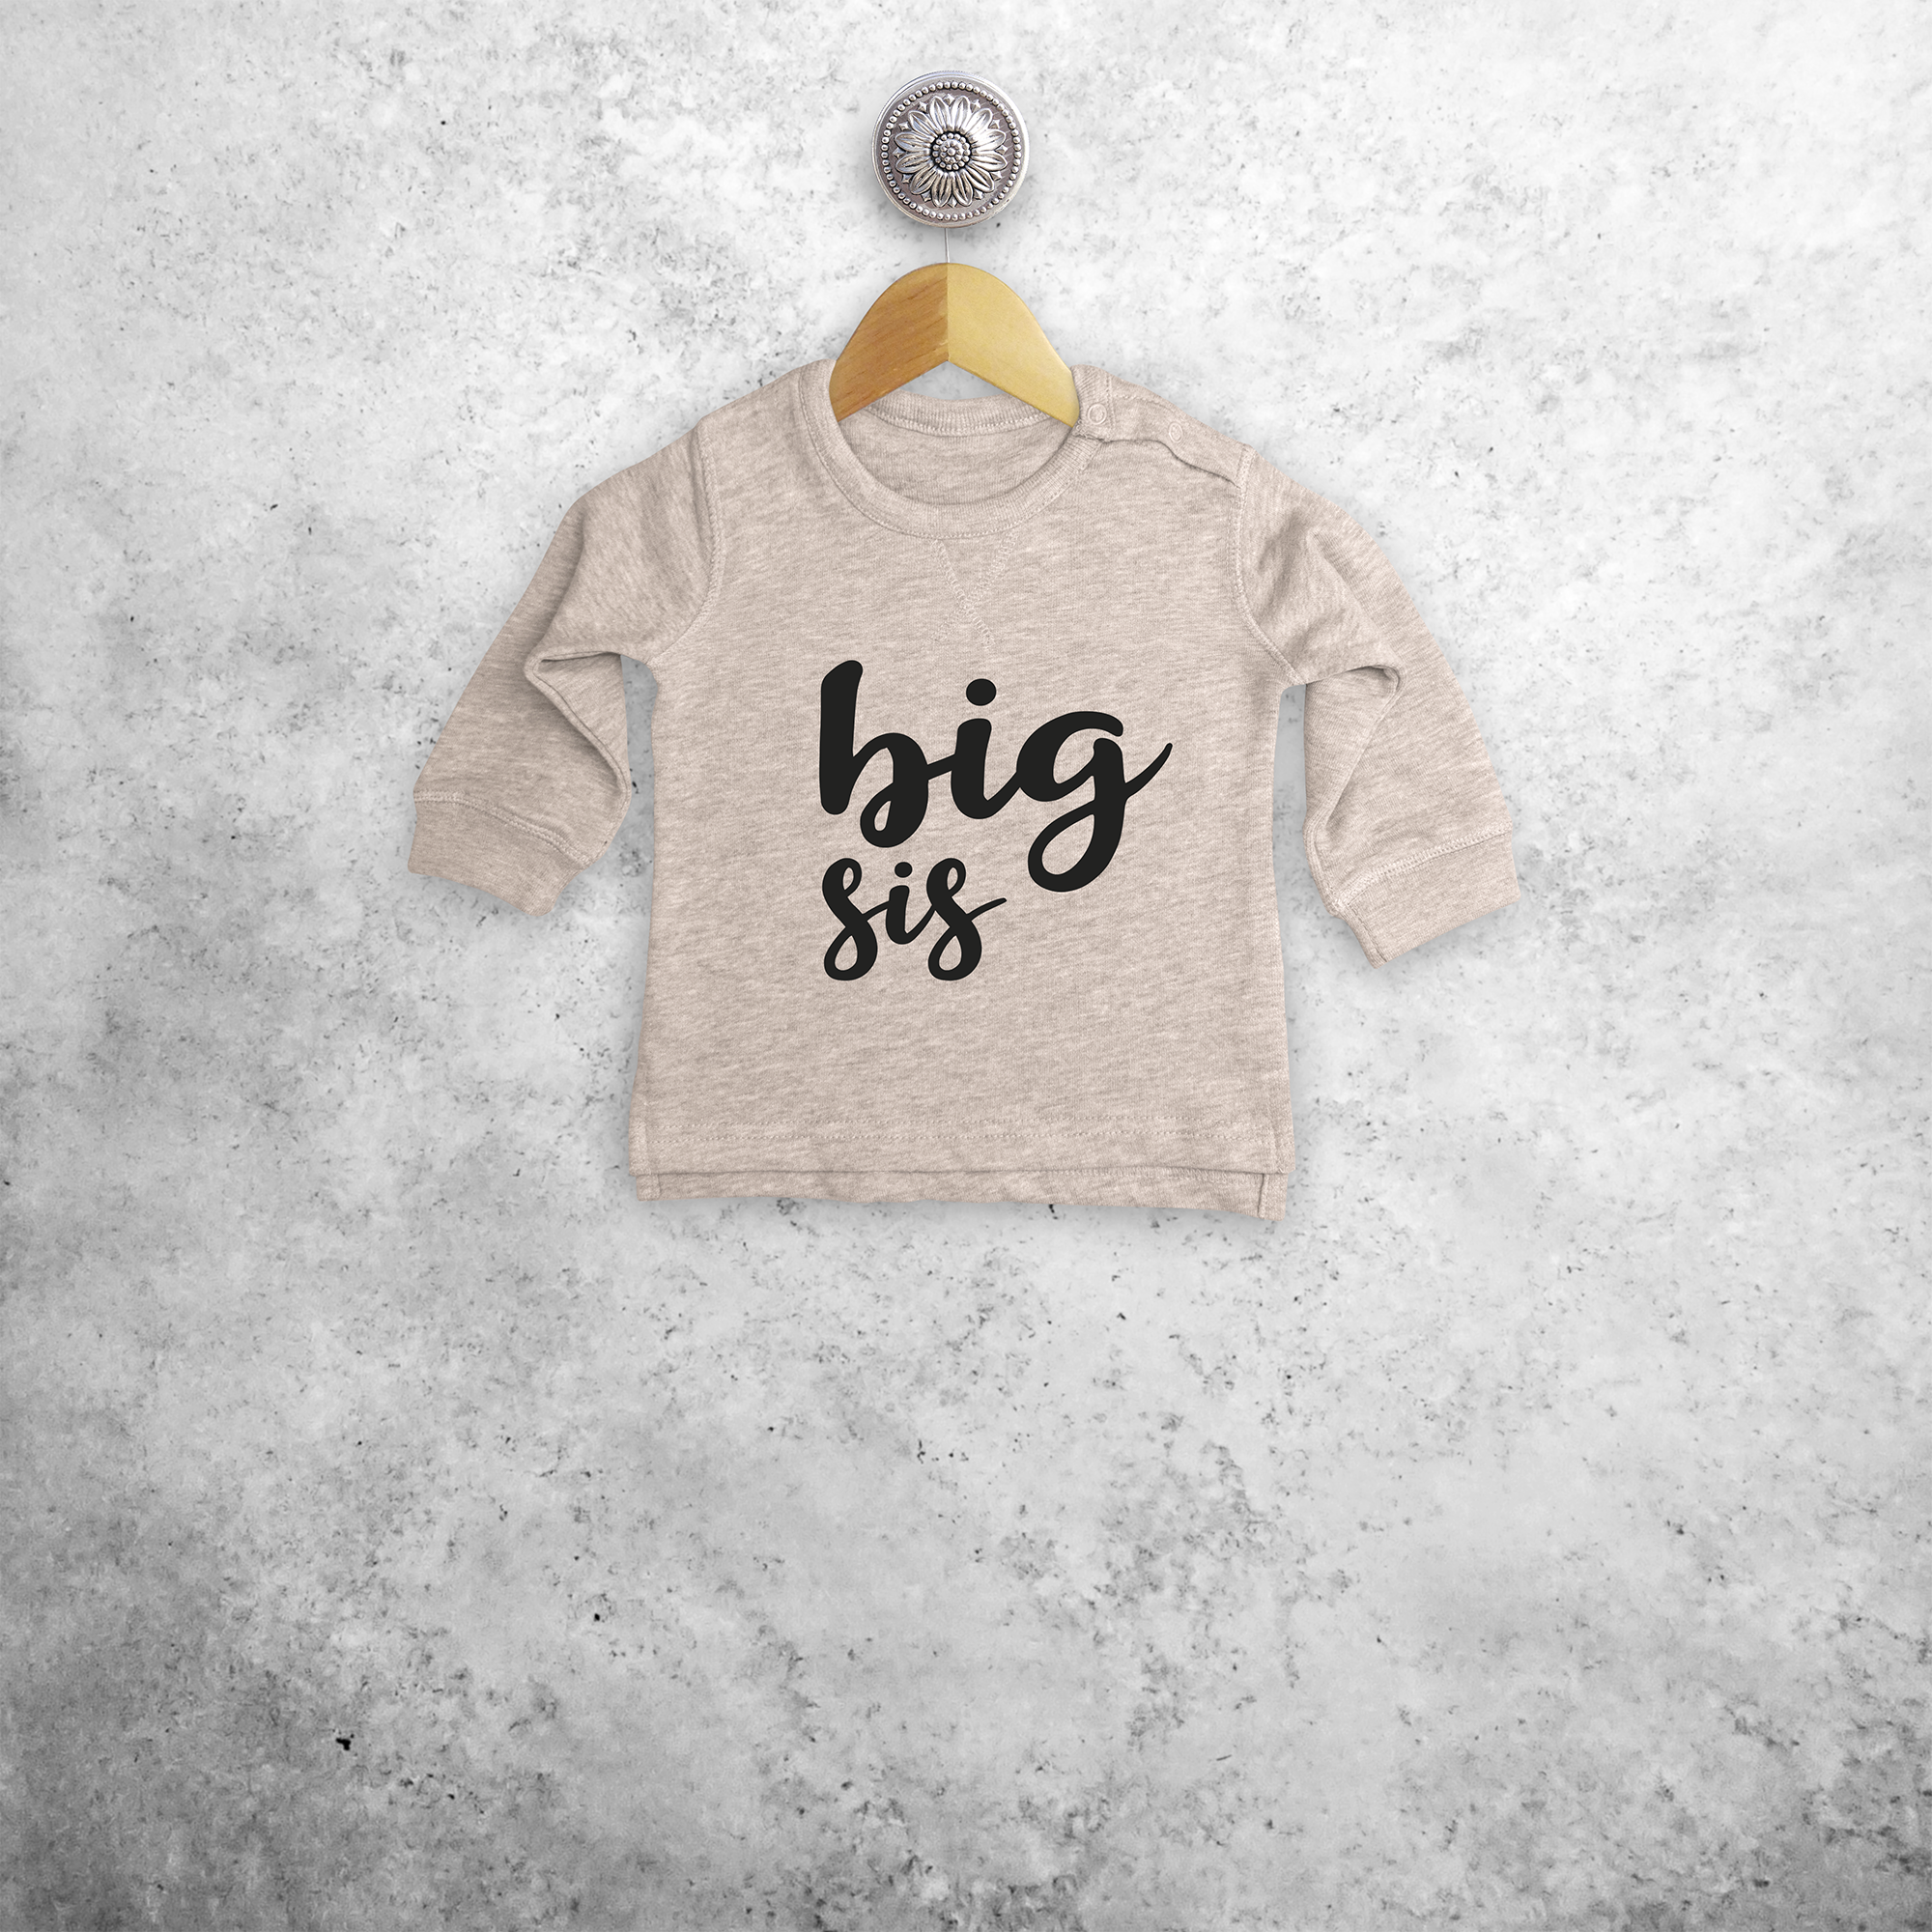 'Big sis' baby sweater